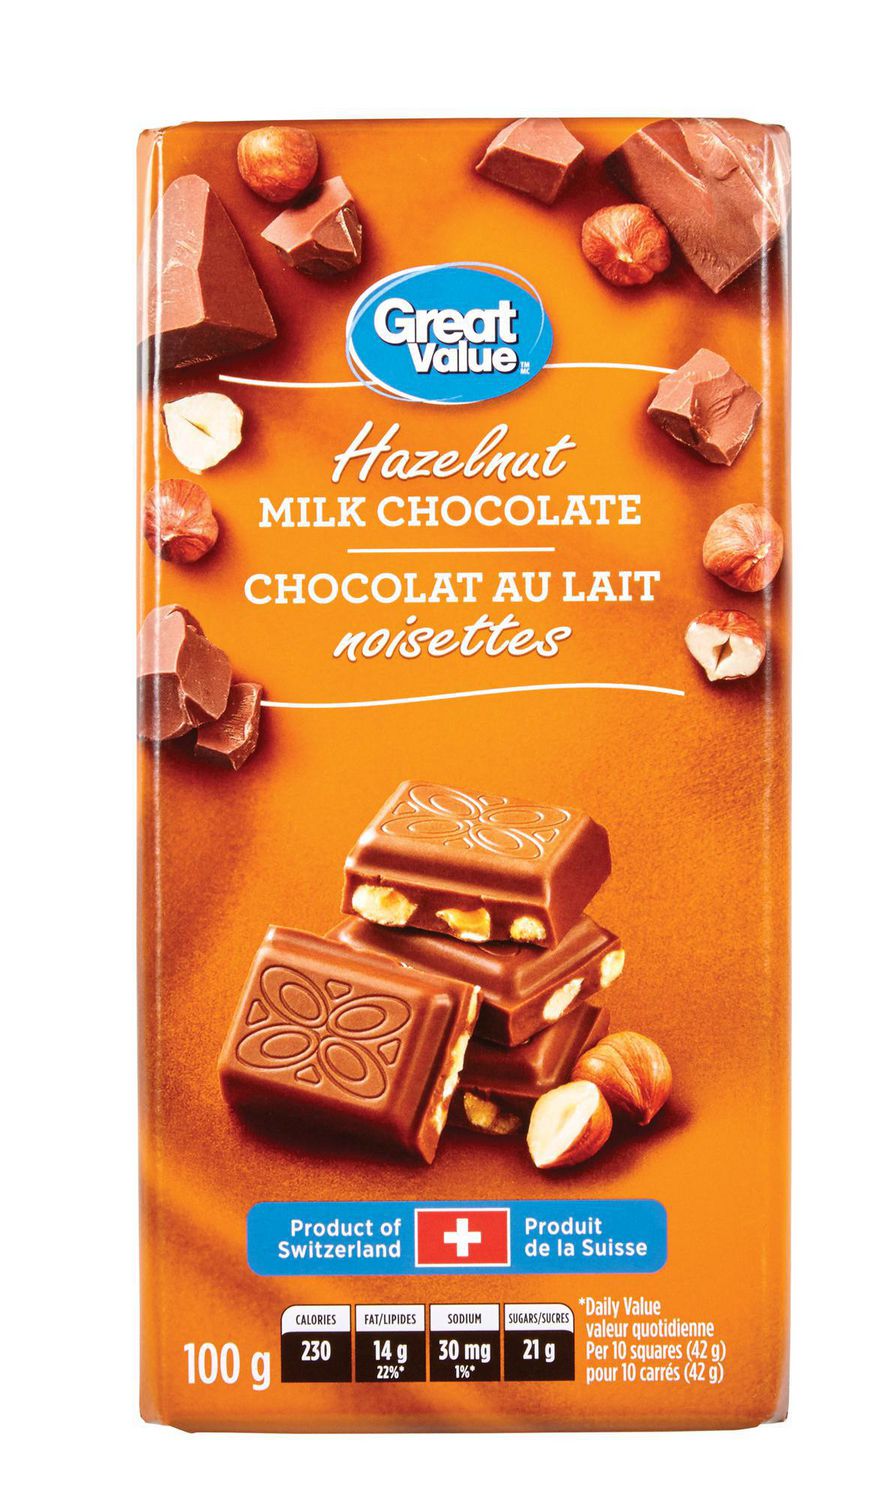 Great Value Great Value Hazelnut Milk Chocolate | Walmart Canada